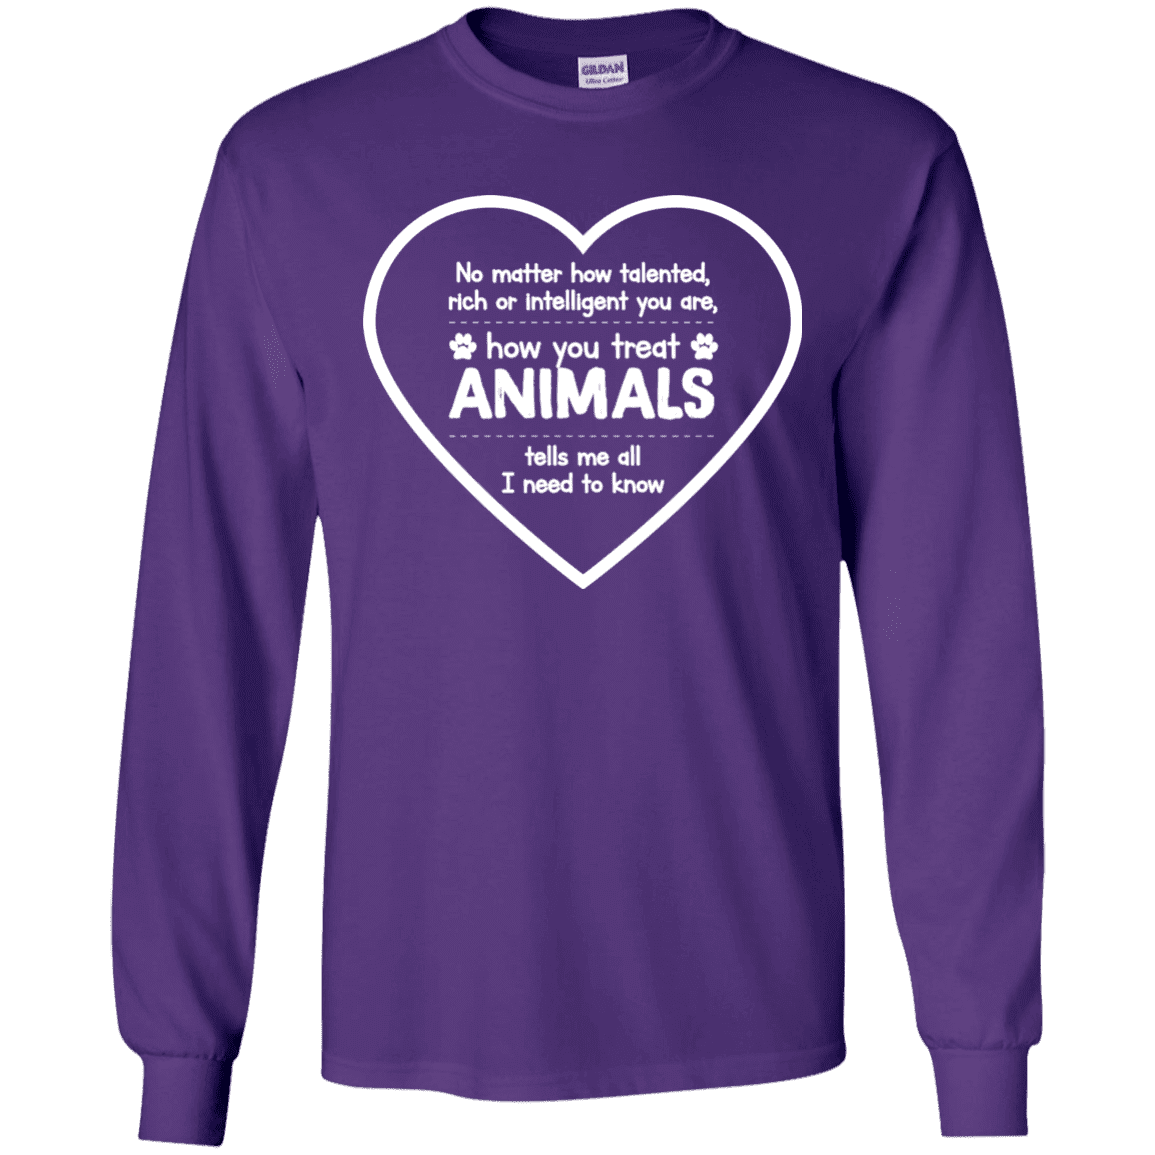 How You Treat Animals - Long Sleeve T Shirt.